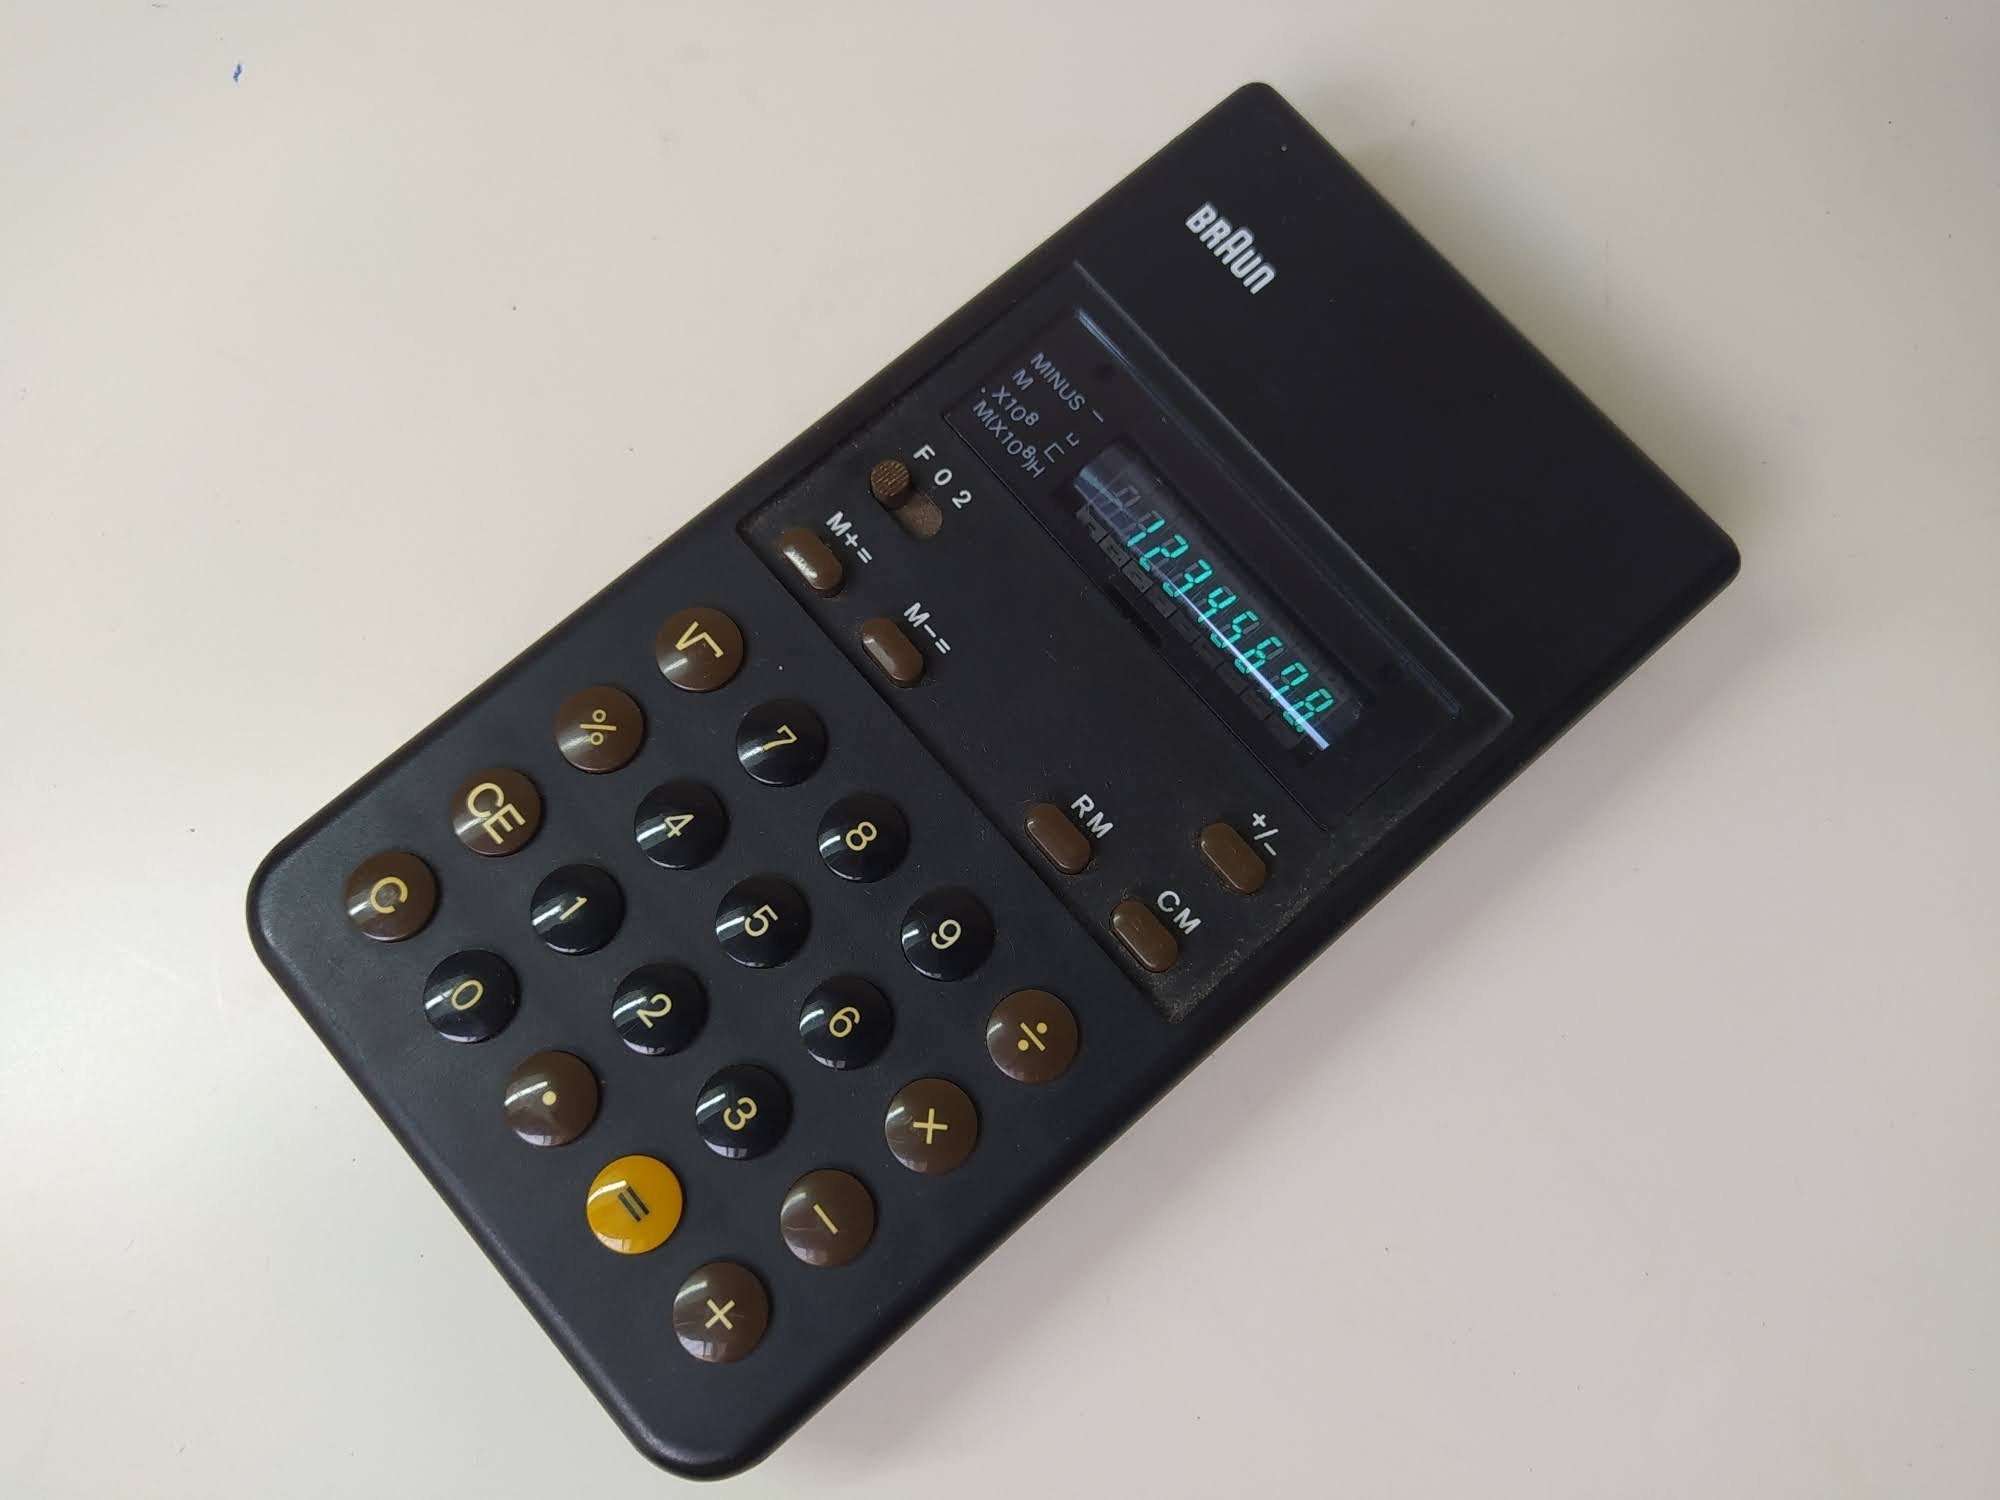 Braun ET 22 Calculator / Vintage 70s Calculator / Dieter Rams - Etsy Israel